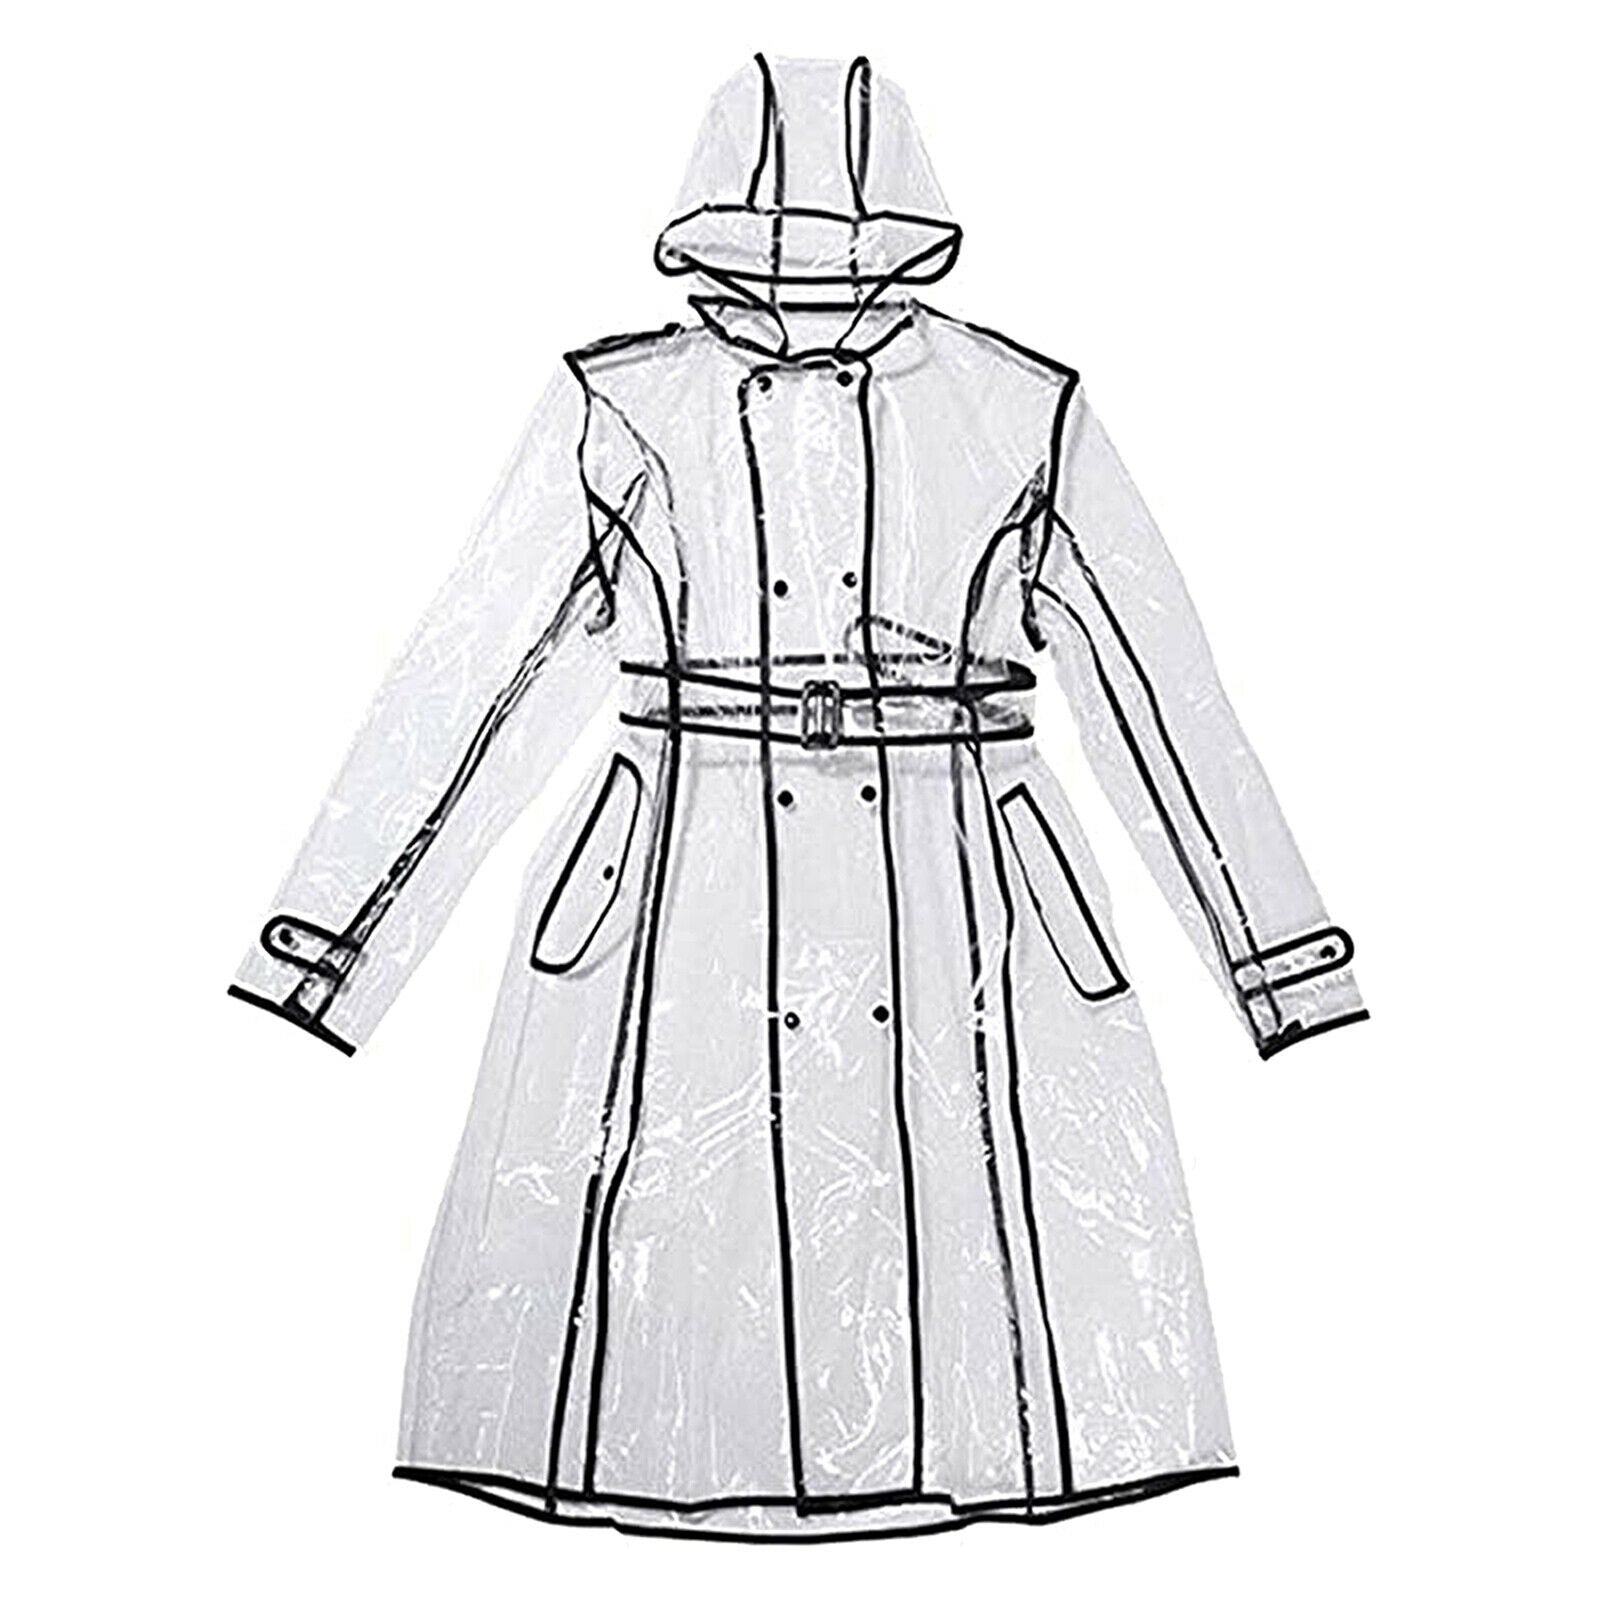 Lightweight Clear Women Raincoat Jacket Rain Poncho Wind Coat with Belts Hood